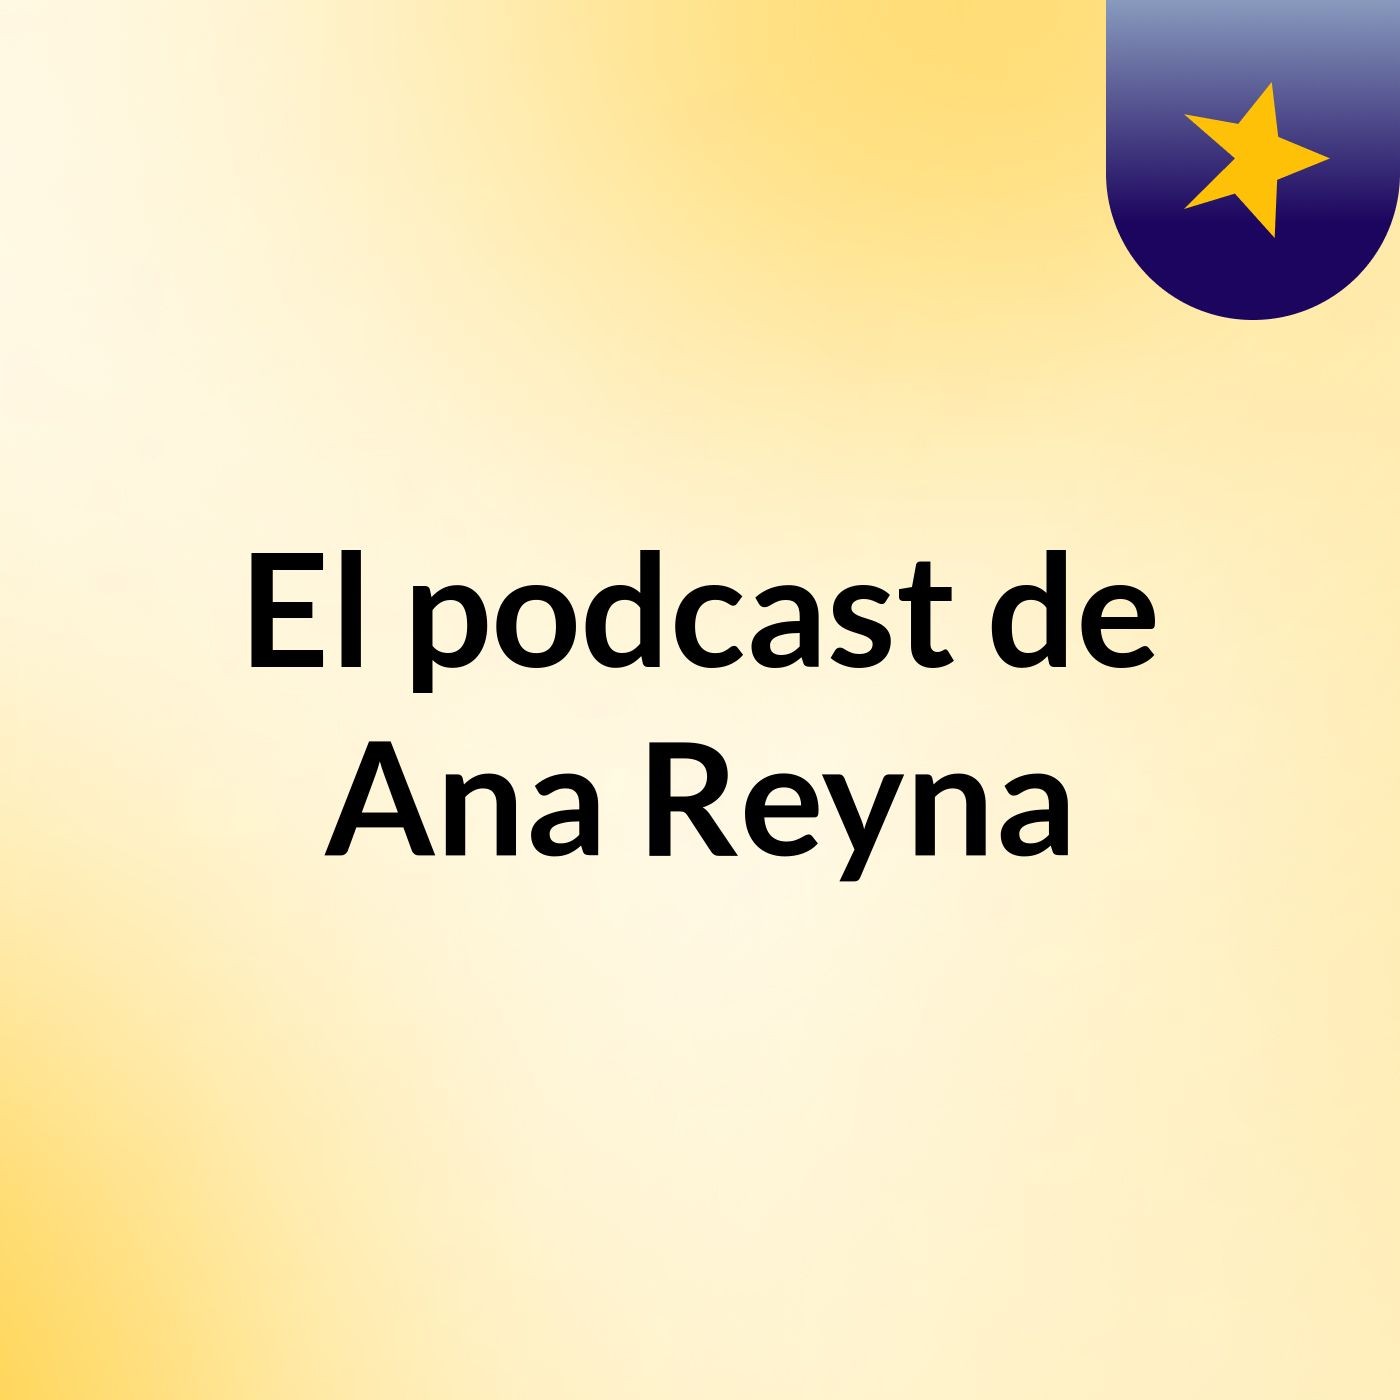 El podcast de Ana Reyna